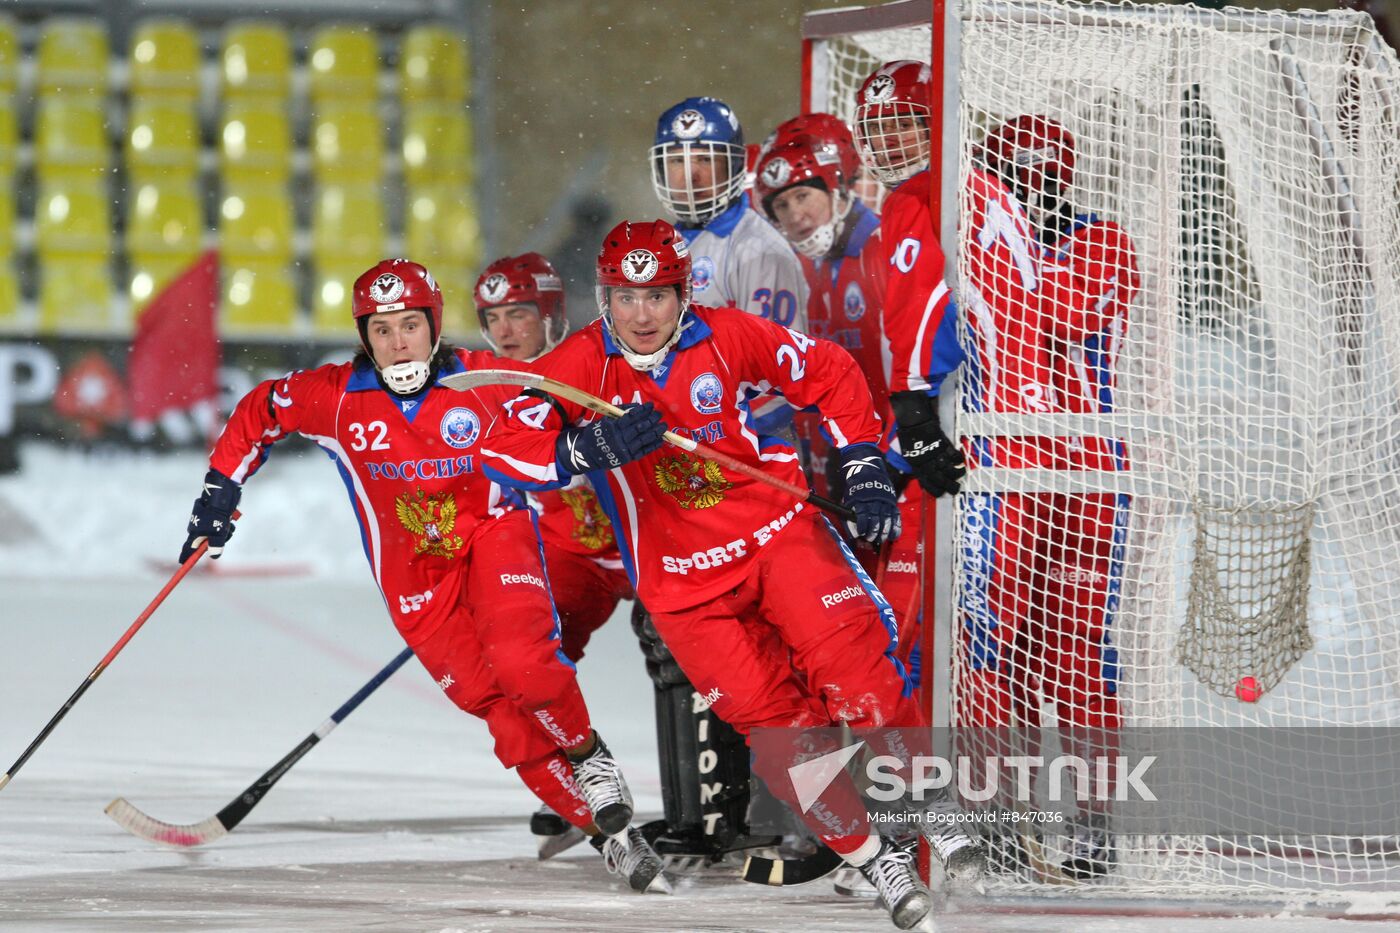 2011 Bandy World Championships. Russia vs. Finland